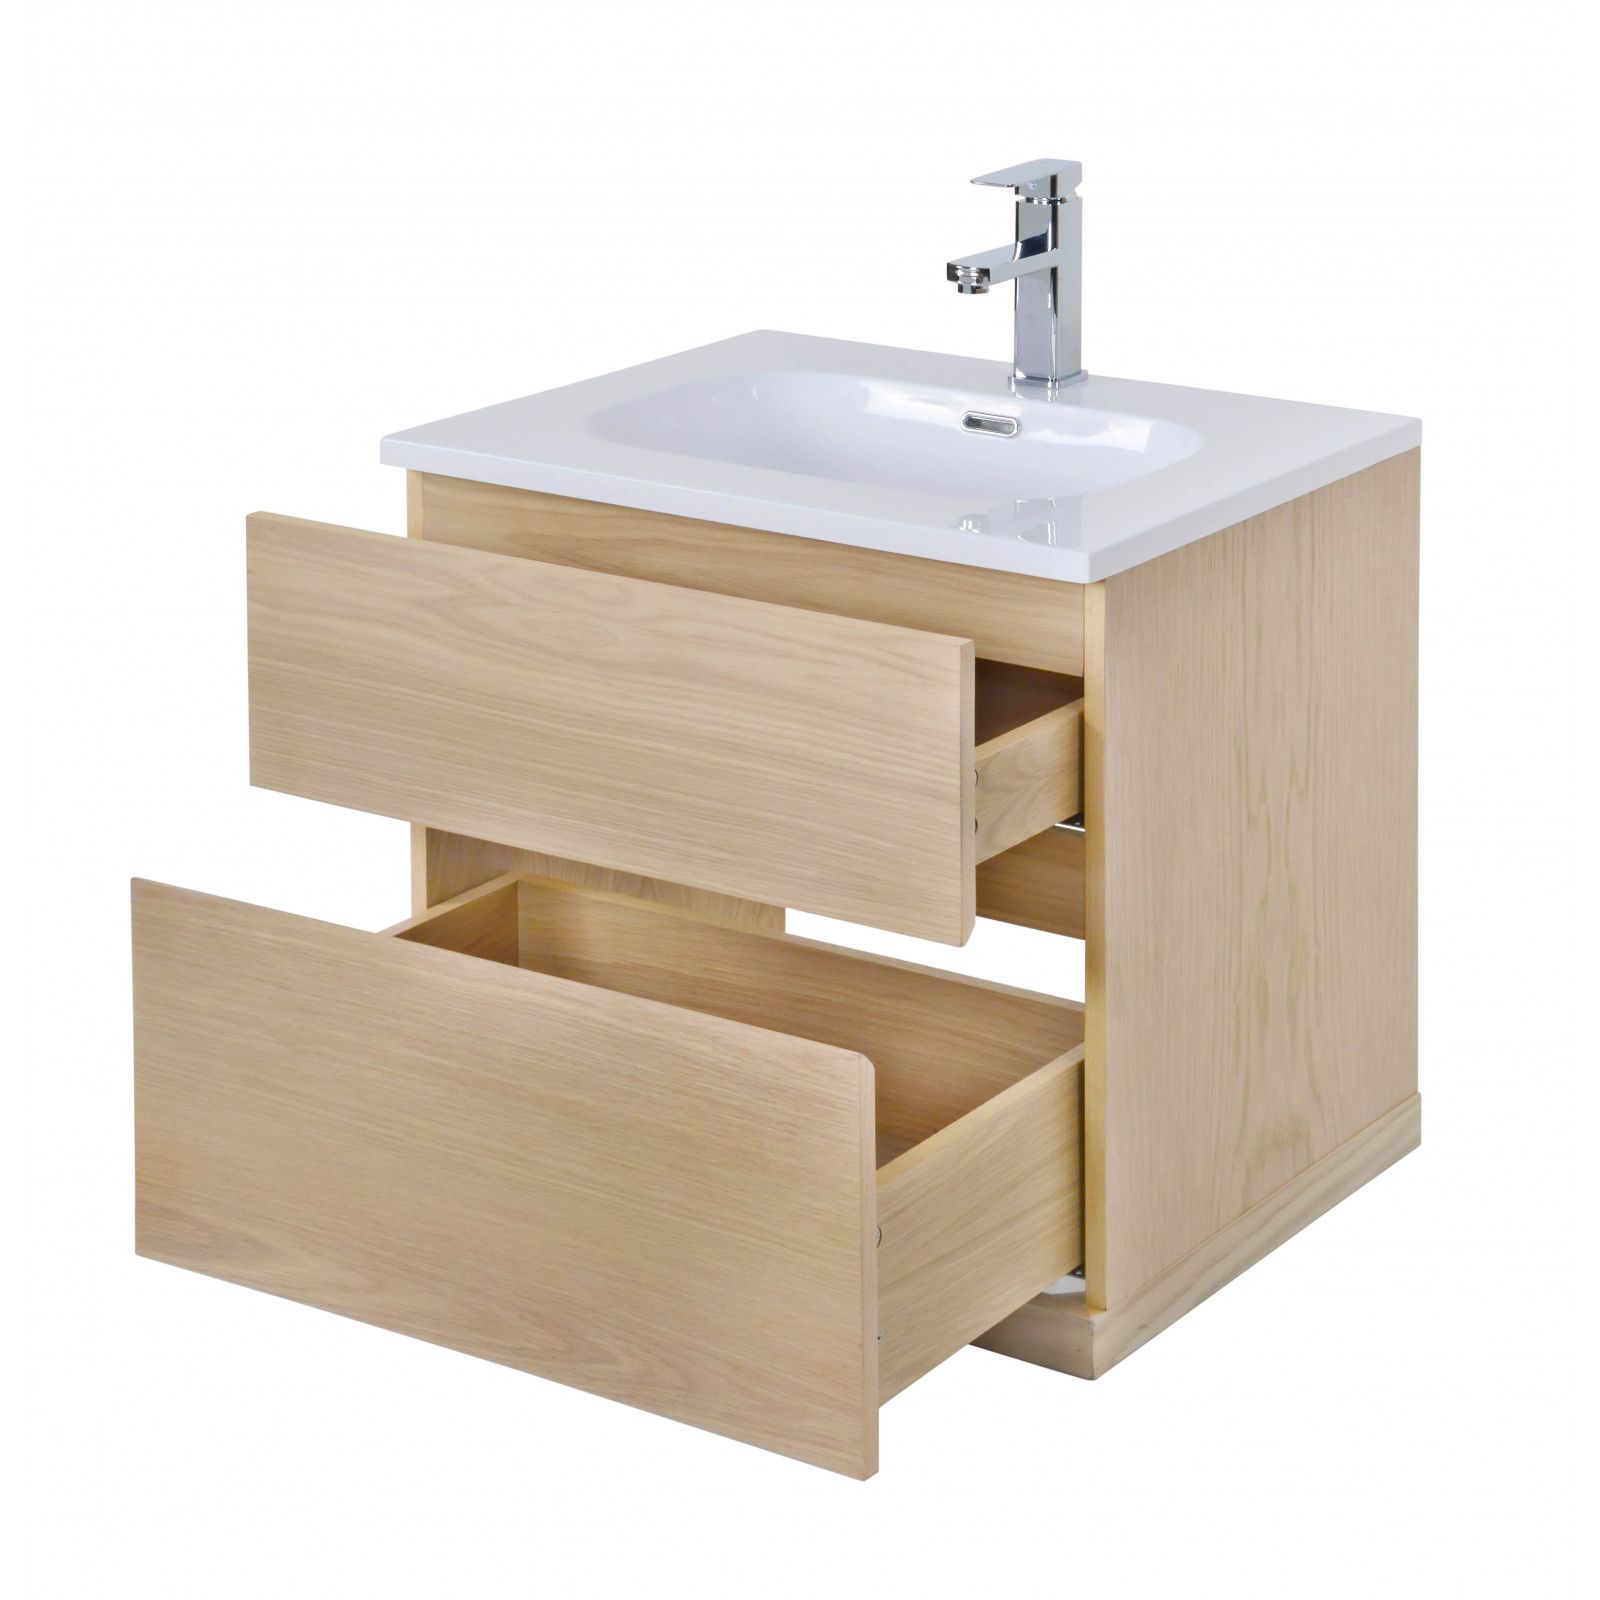 Ensemble salle de bain chêne 60 cm meuble + vasque + miroir + module rangement ENIO